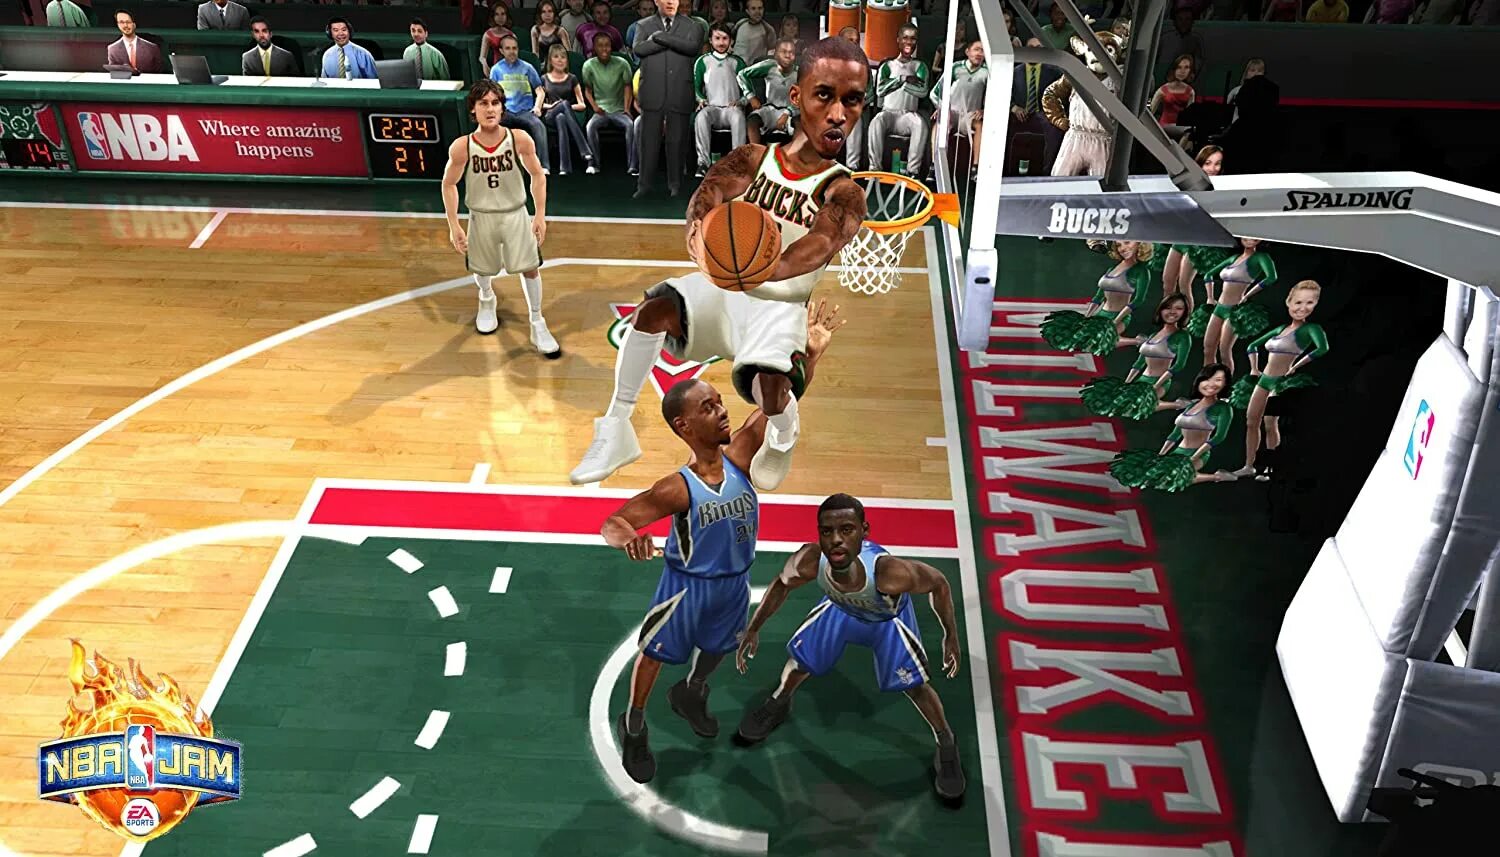 НБА джэм. NBA Jam ps3 управление. Игра NBA Jam ps3. NBA Jam (2010 Video game). Amazing where